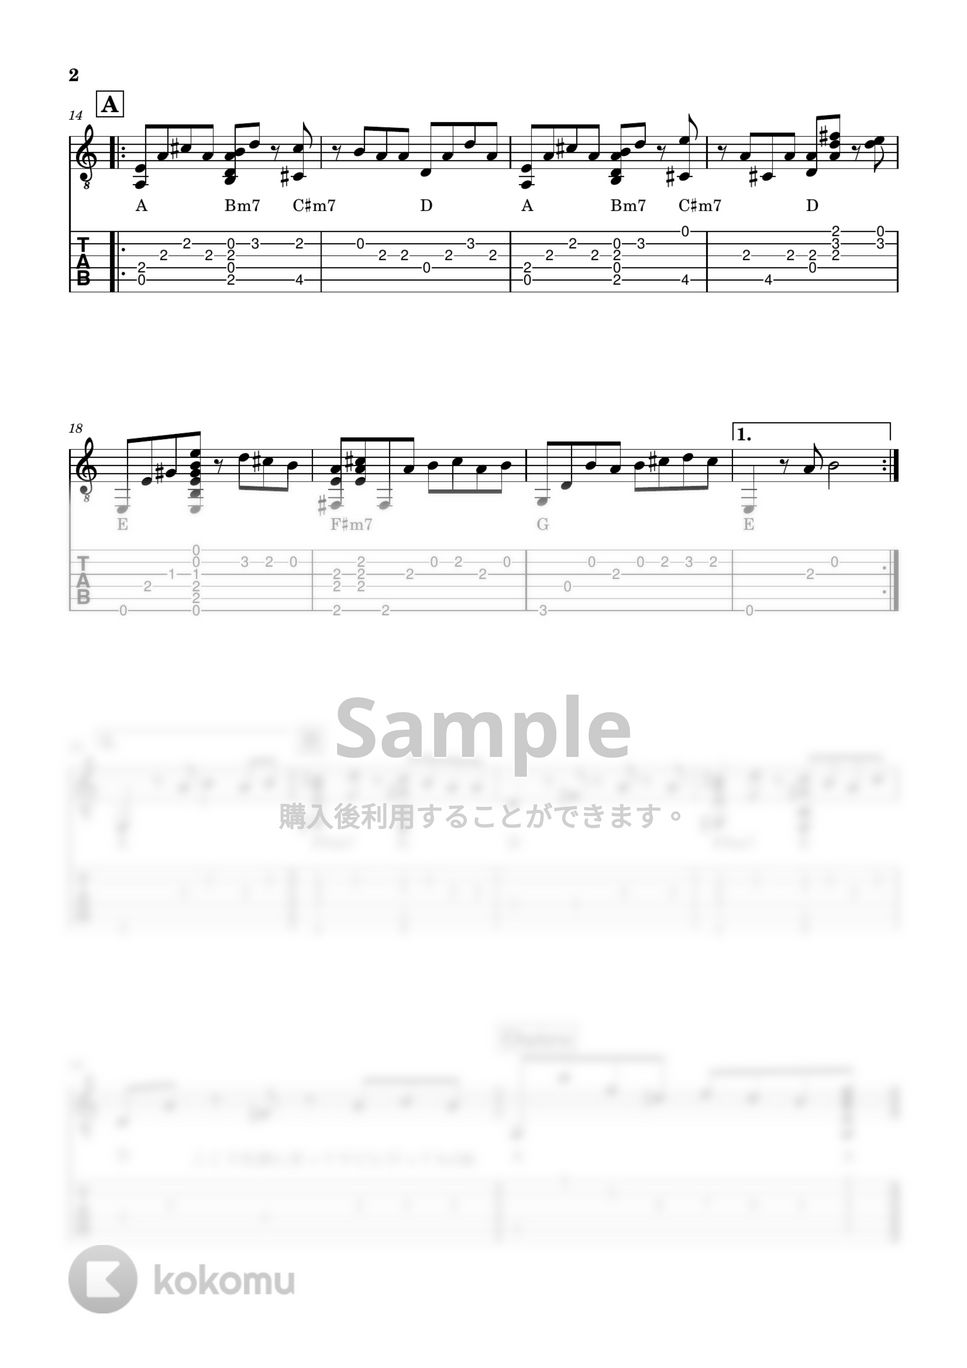 Saucy Dog - シンデレラボーイ (ピック弾きソロギターアレンジ) by Dsuke